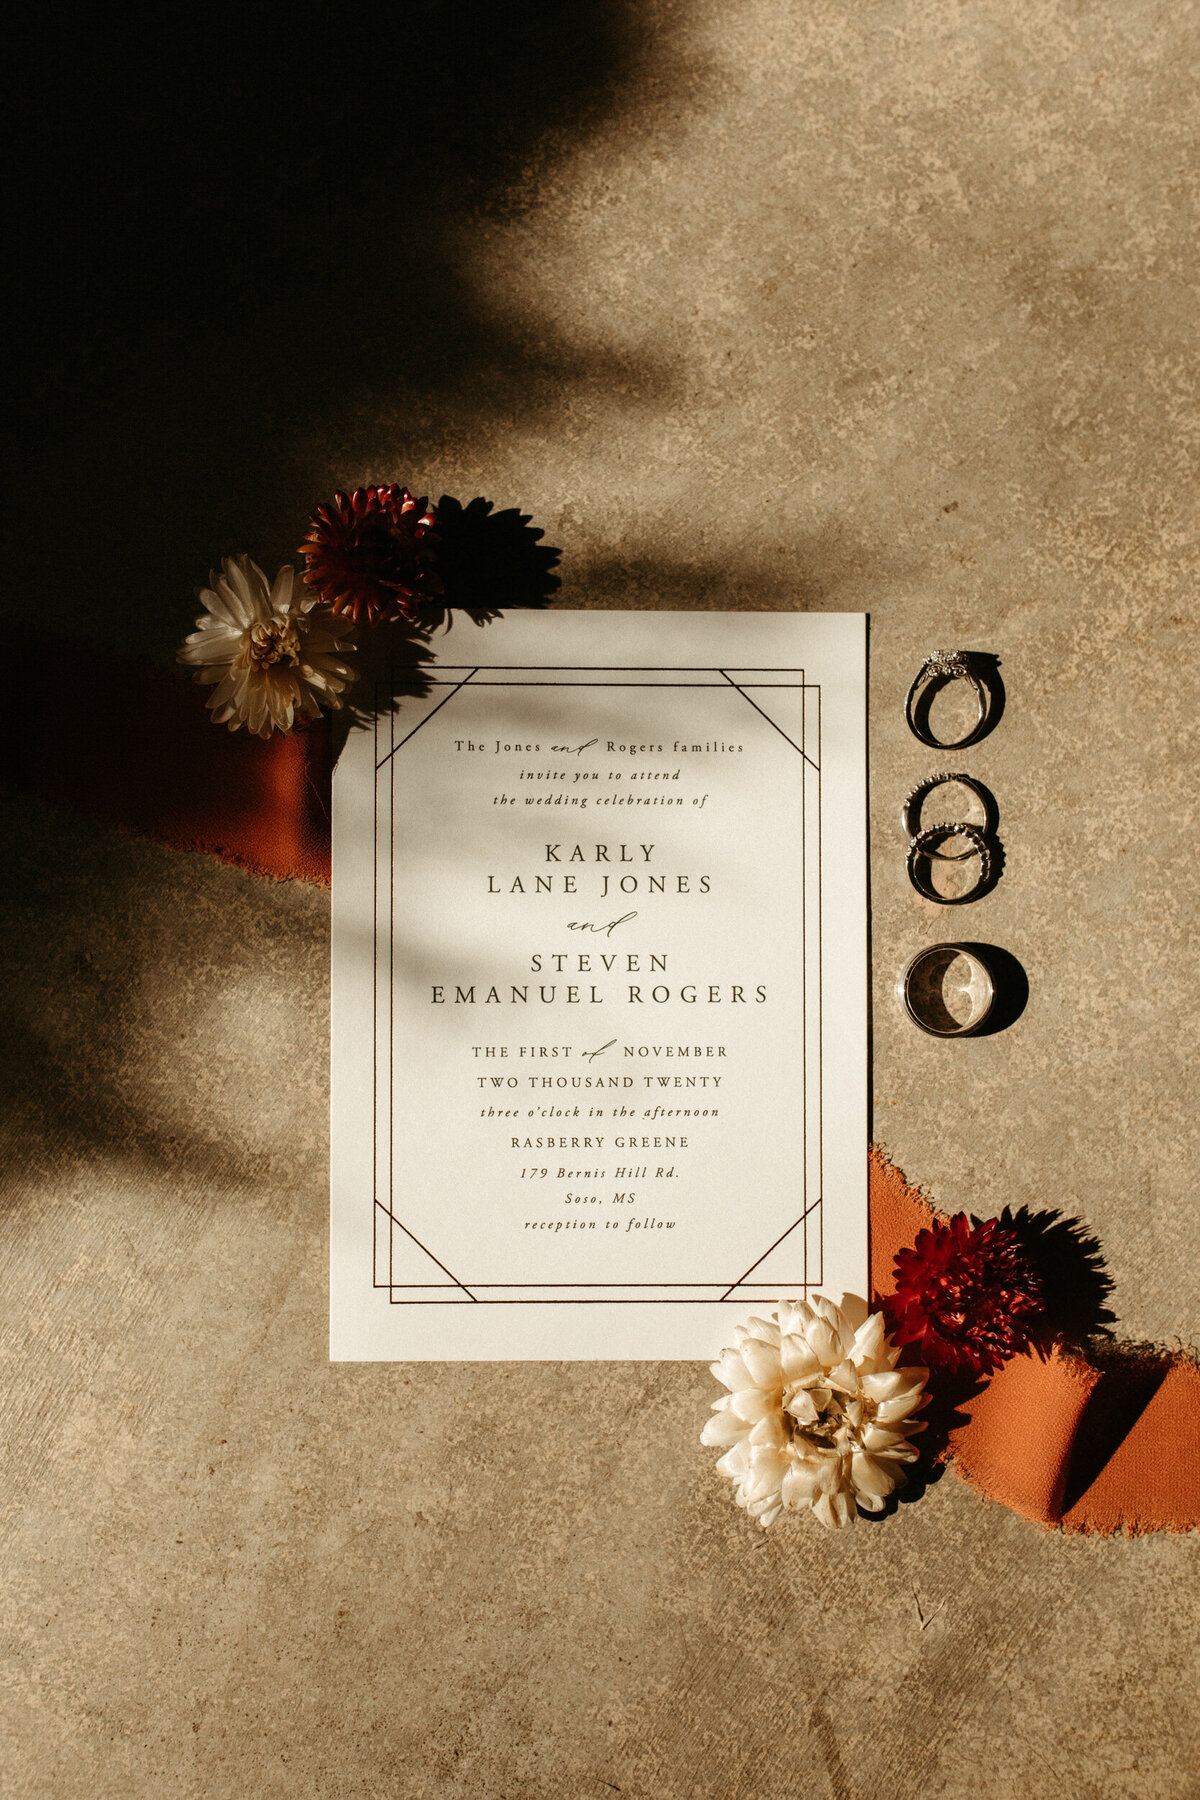 mississippi-wedding-rasberry-greene-venue-details-detail-shots-rings-invitations-florals-decorations-flat-lay